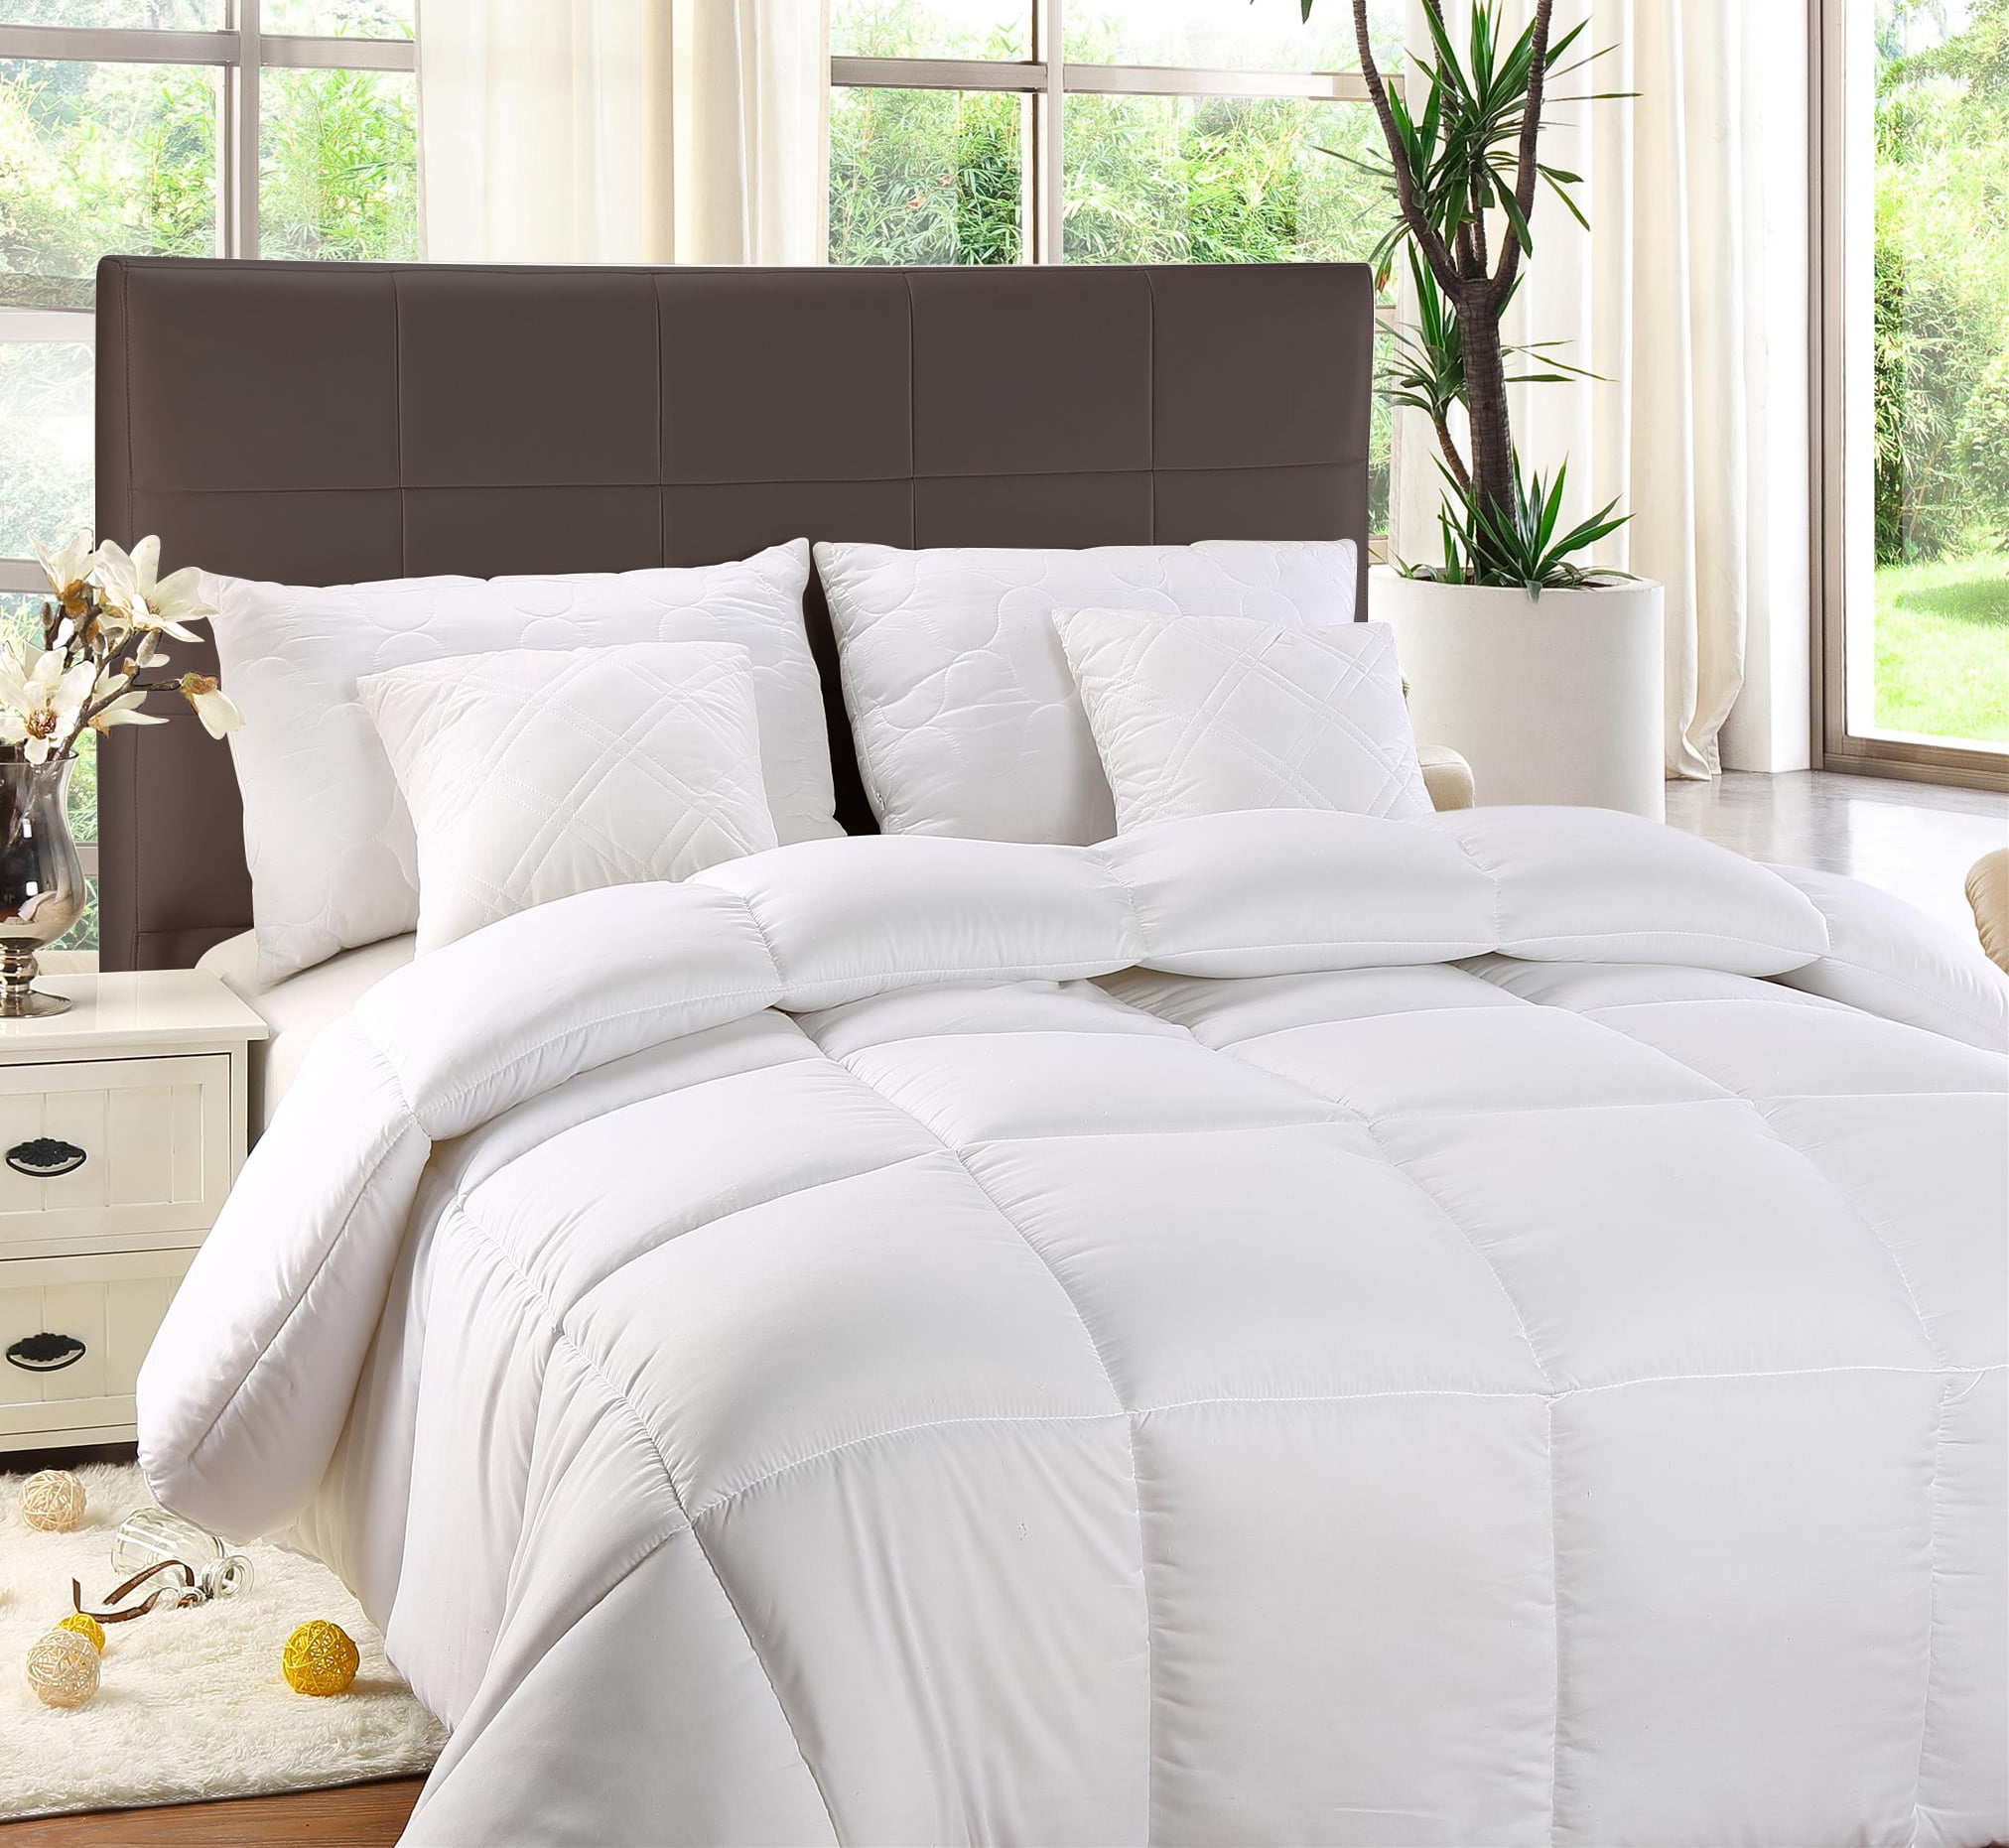 Utopia Bedding comforter Duvet Insert - Quilted comforter with corner Tabs  - Box Stitched Down Alternative comforter (Twin, Beig